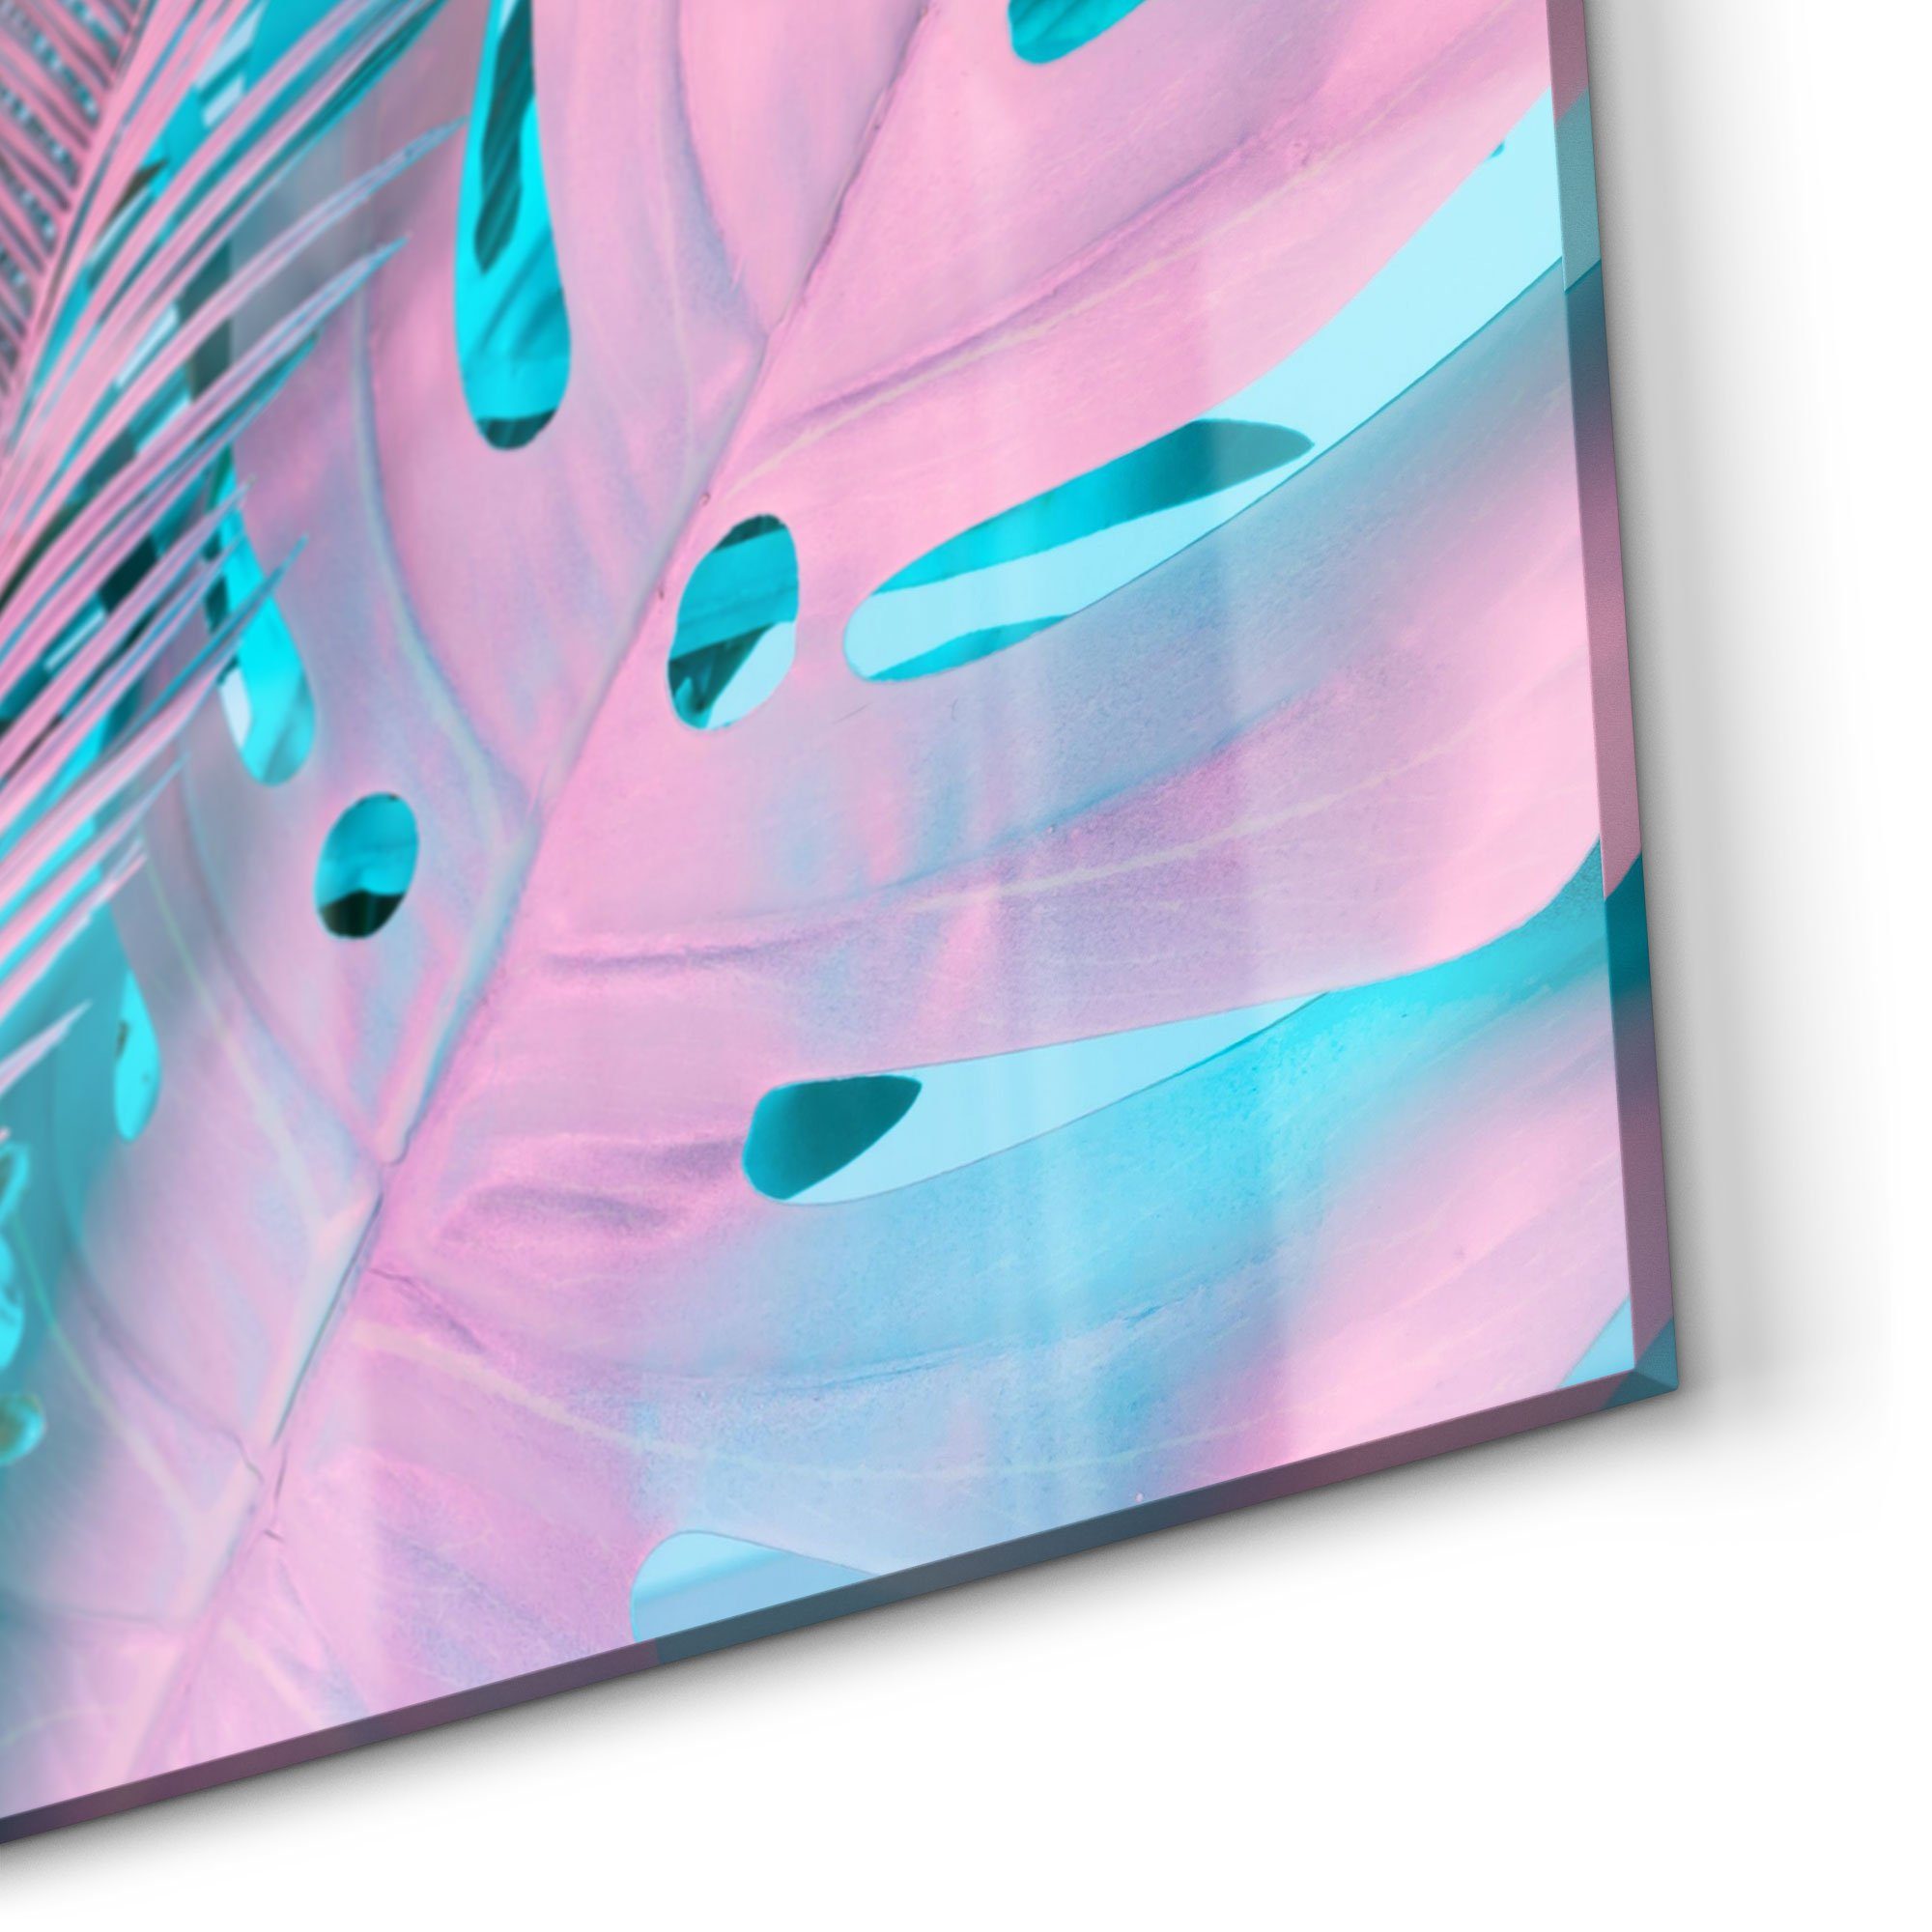 Badrückwand Glas Spritzschutz Herdblende Farbeffekt', DEQORI Küchenrückwand 'Tropenblätter: